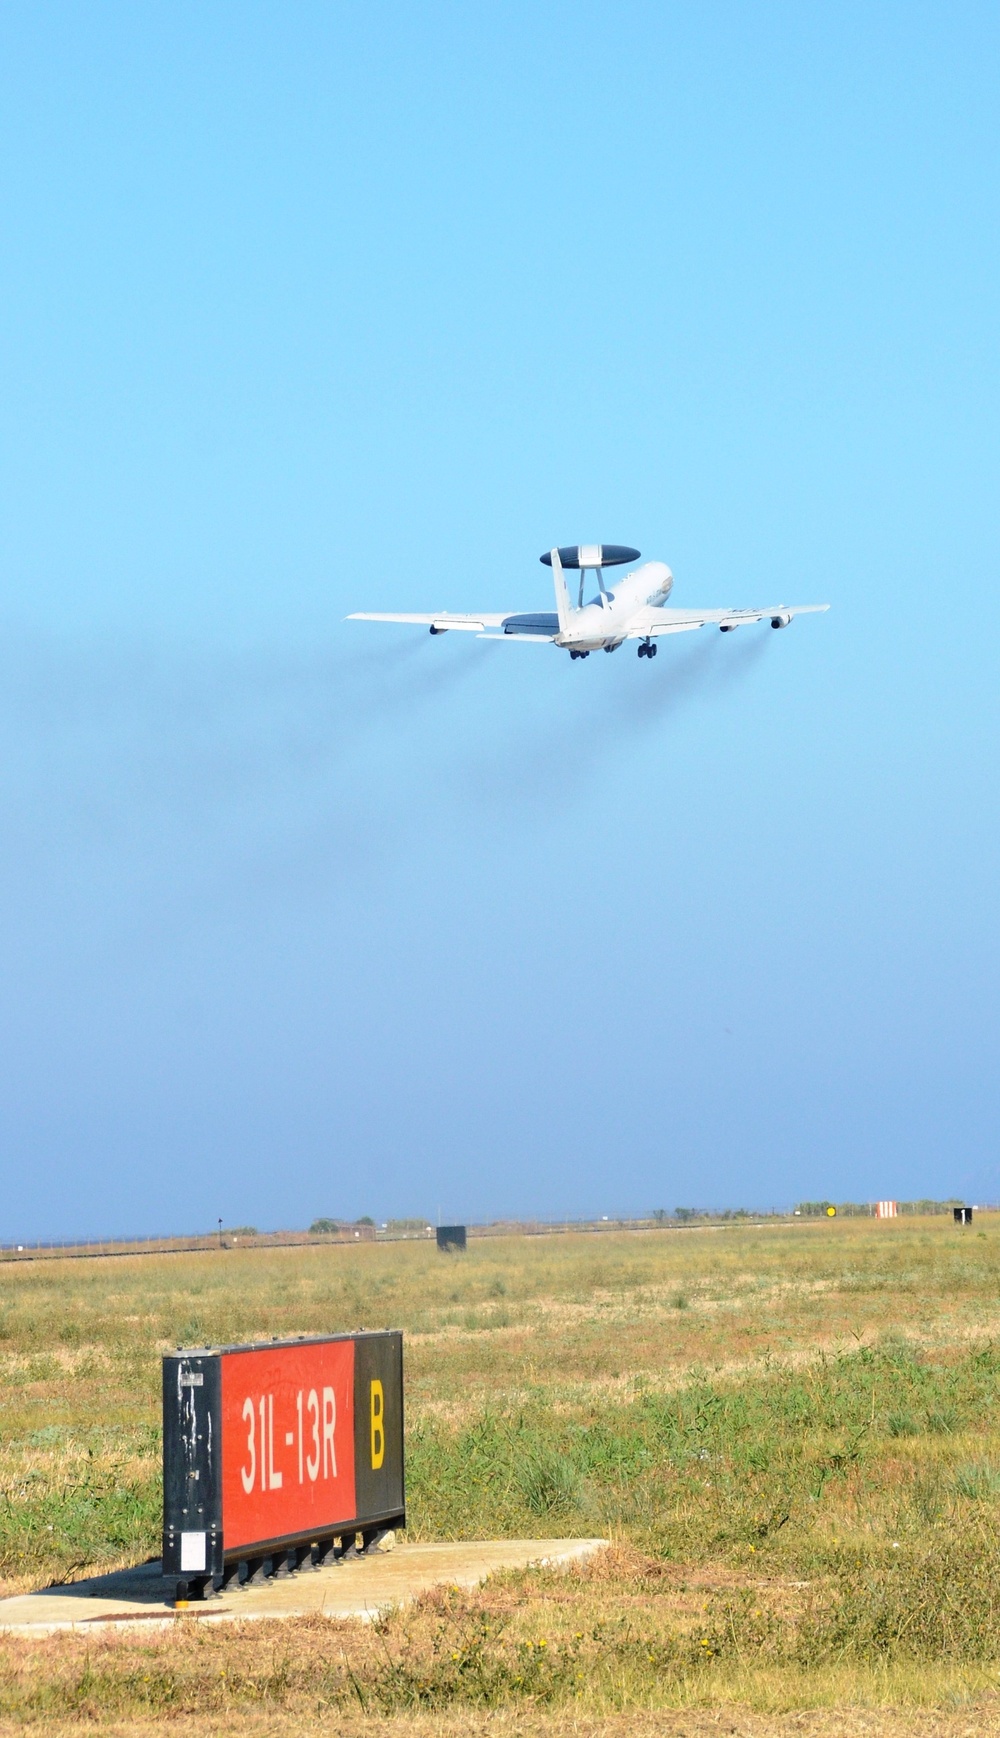 FOB Trapani helps NATO employ AWACS over Romania